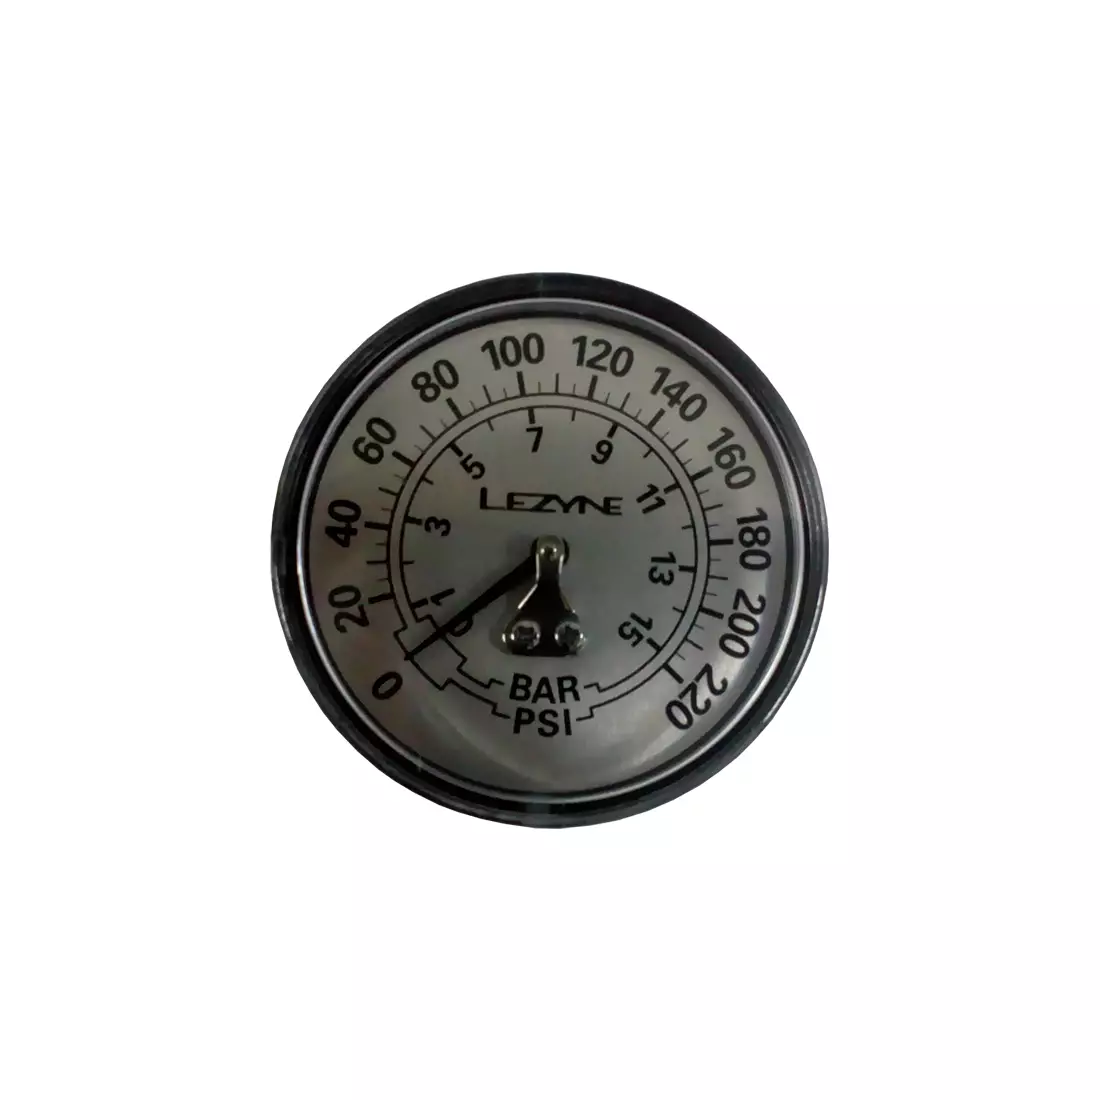 LEZYNE 220 Floor pump manometer LZN-1-RP-FLGUE-V2220